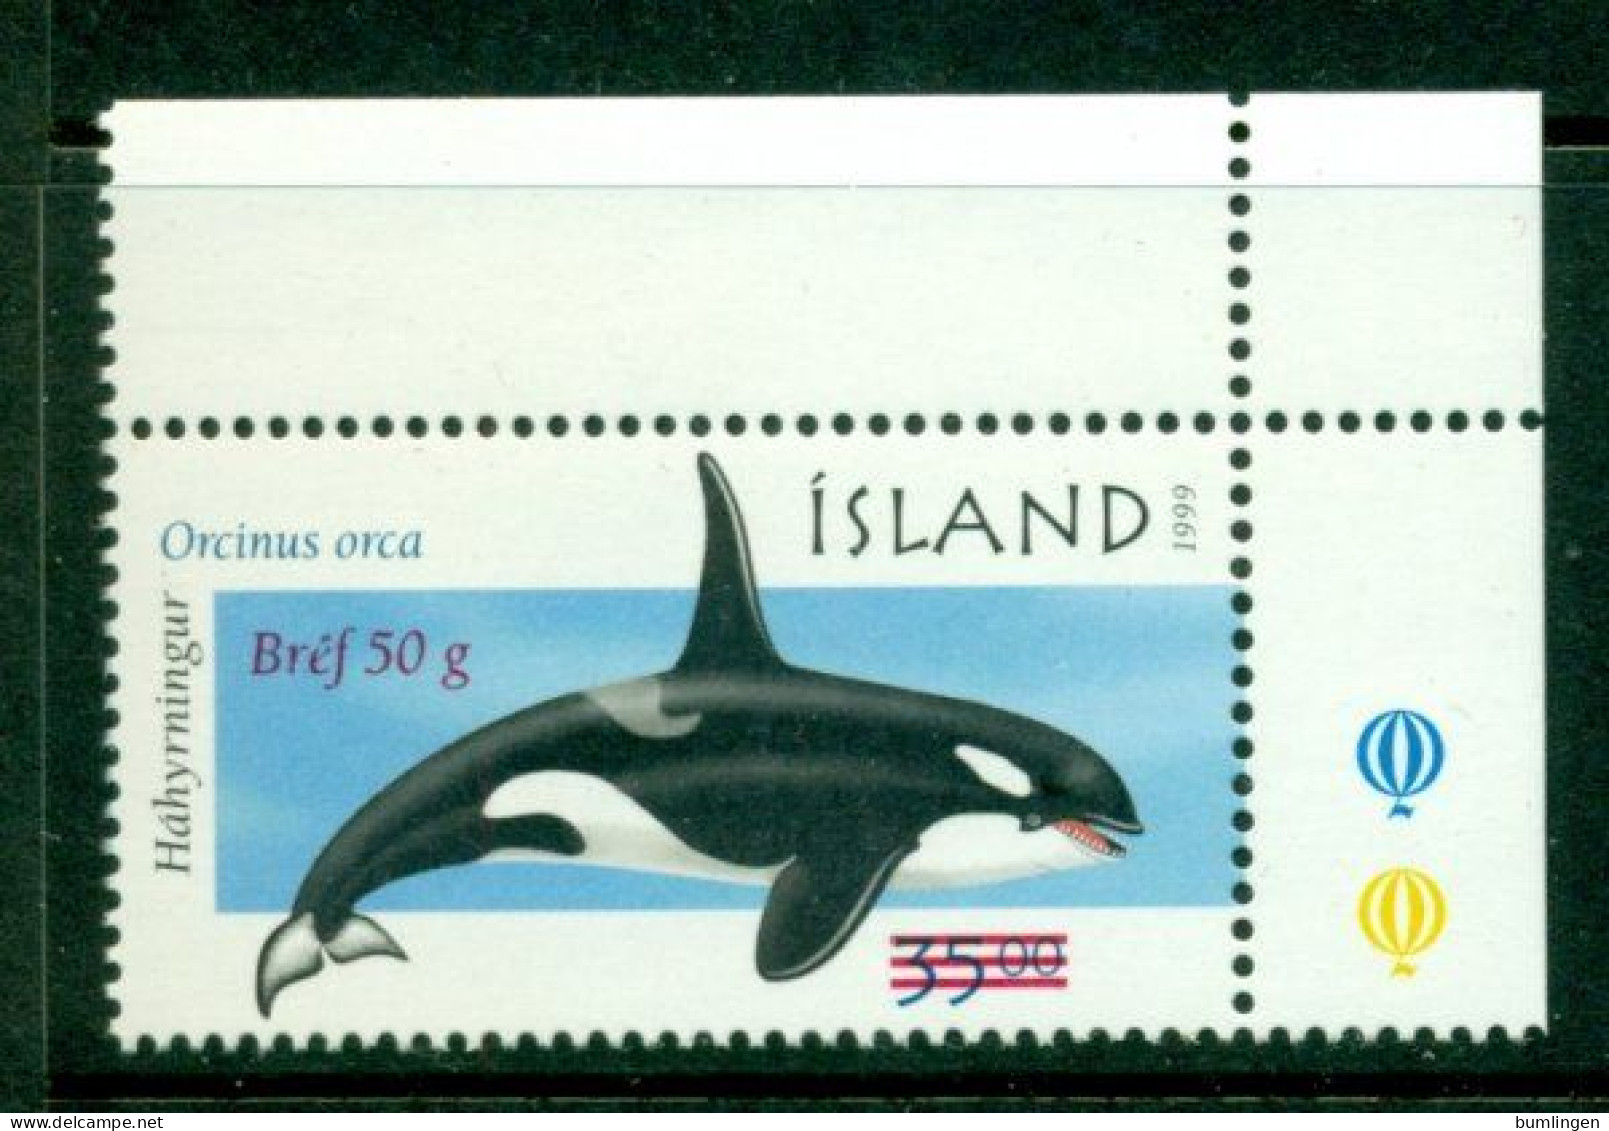 ICELAND 2001 Mi 988** Whale - Surcharge [B594] - Ballenas